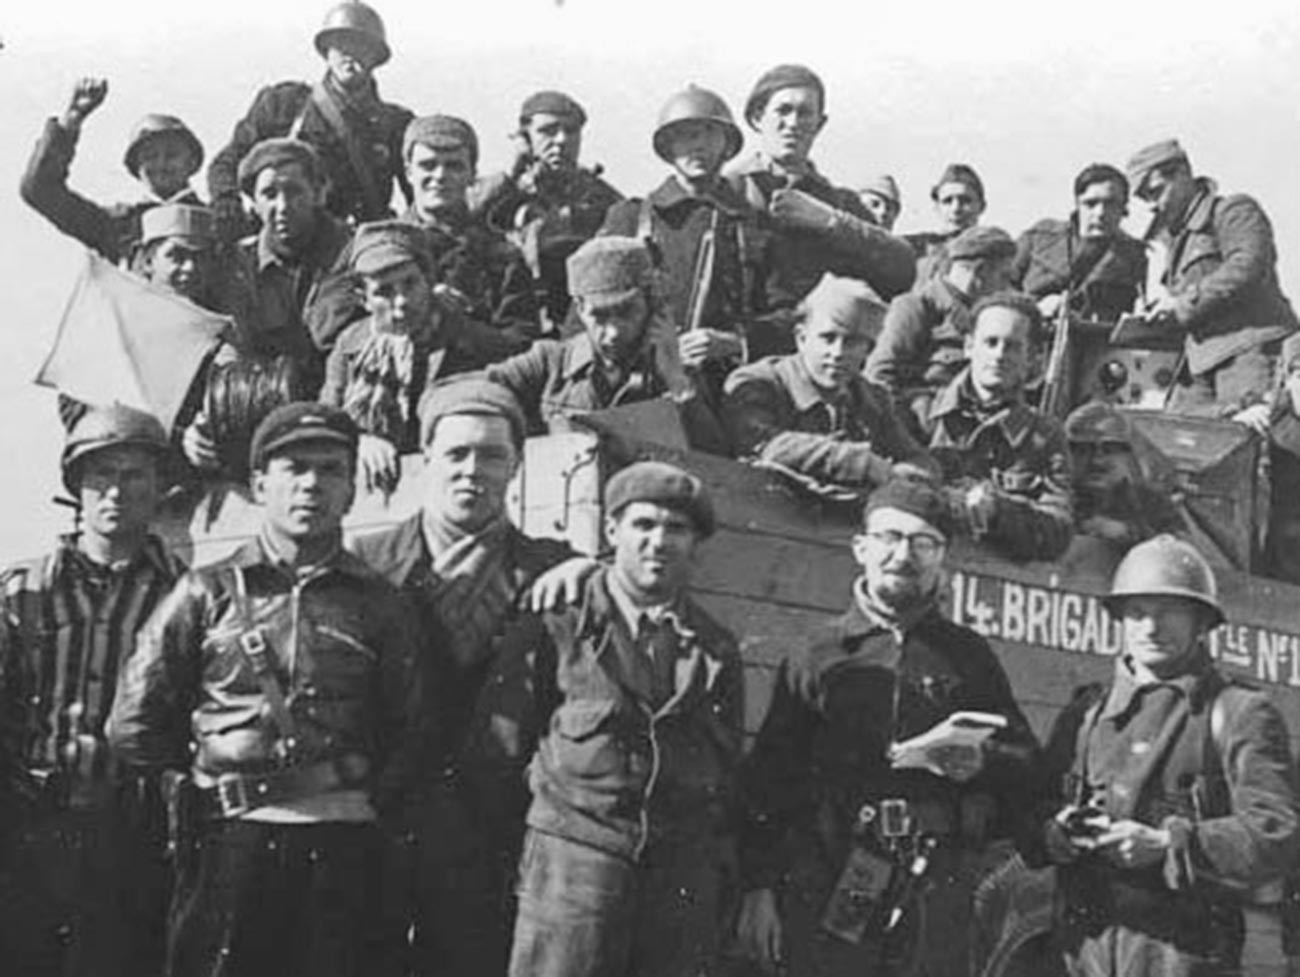 The 14th International Brigade.